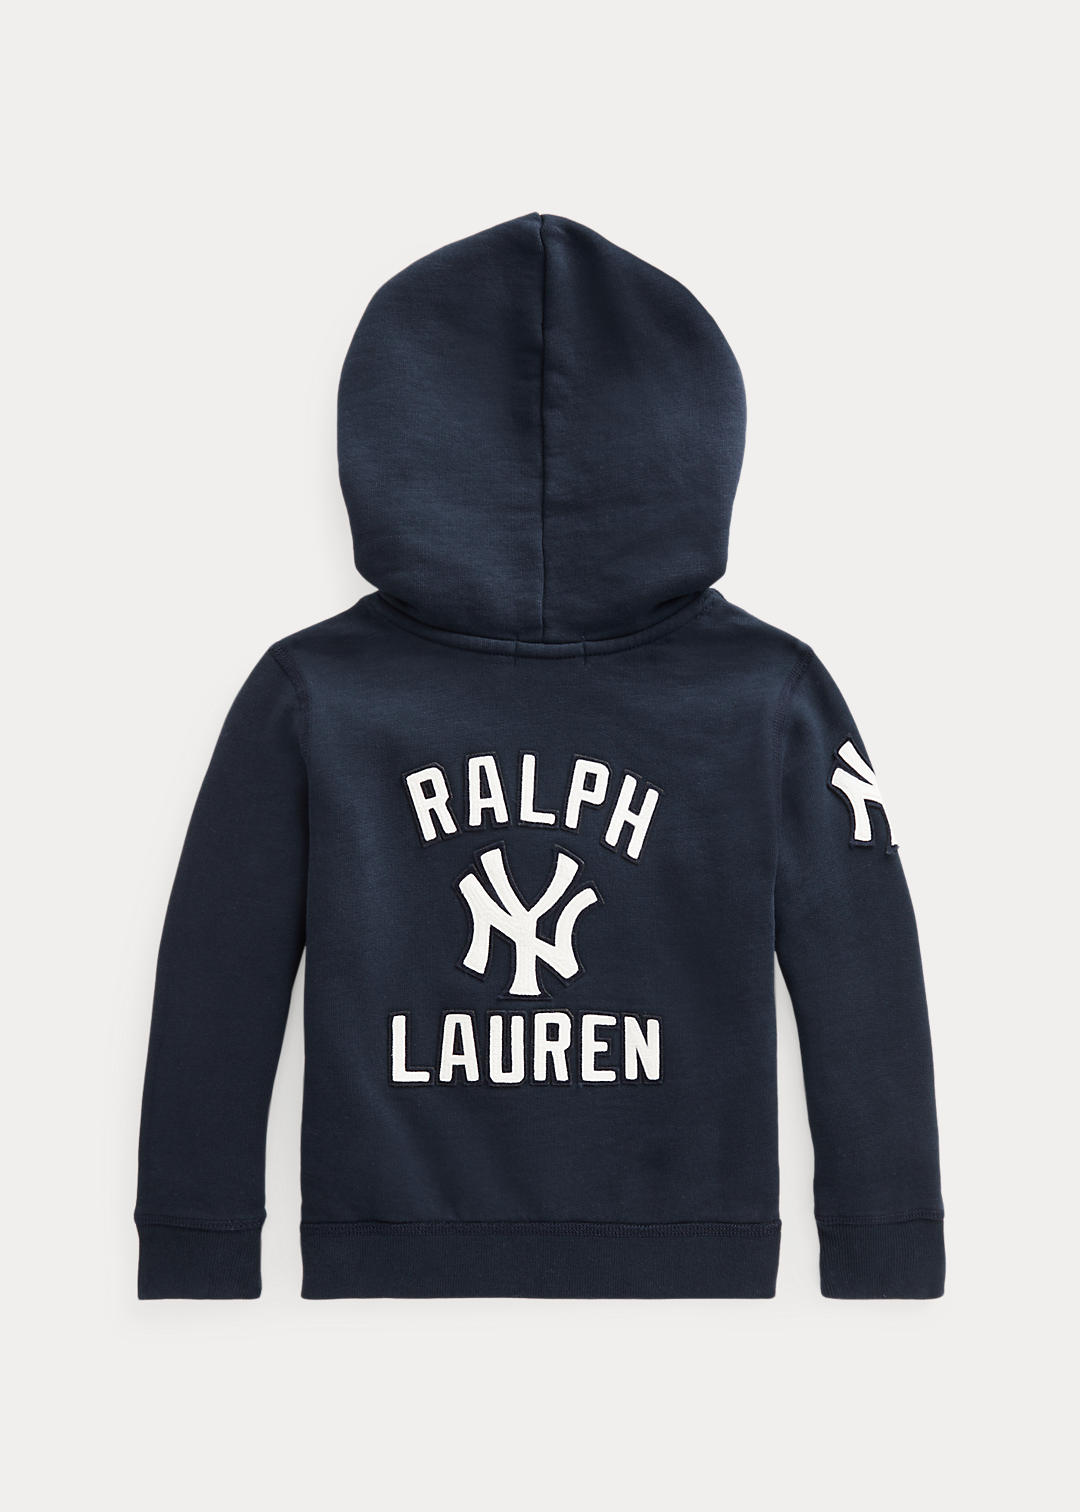 BOYS 1.5-6 YEARS Ralph Lauren Yankees capuchontrui 2